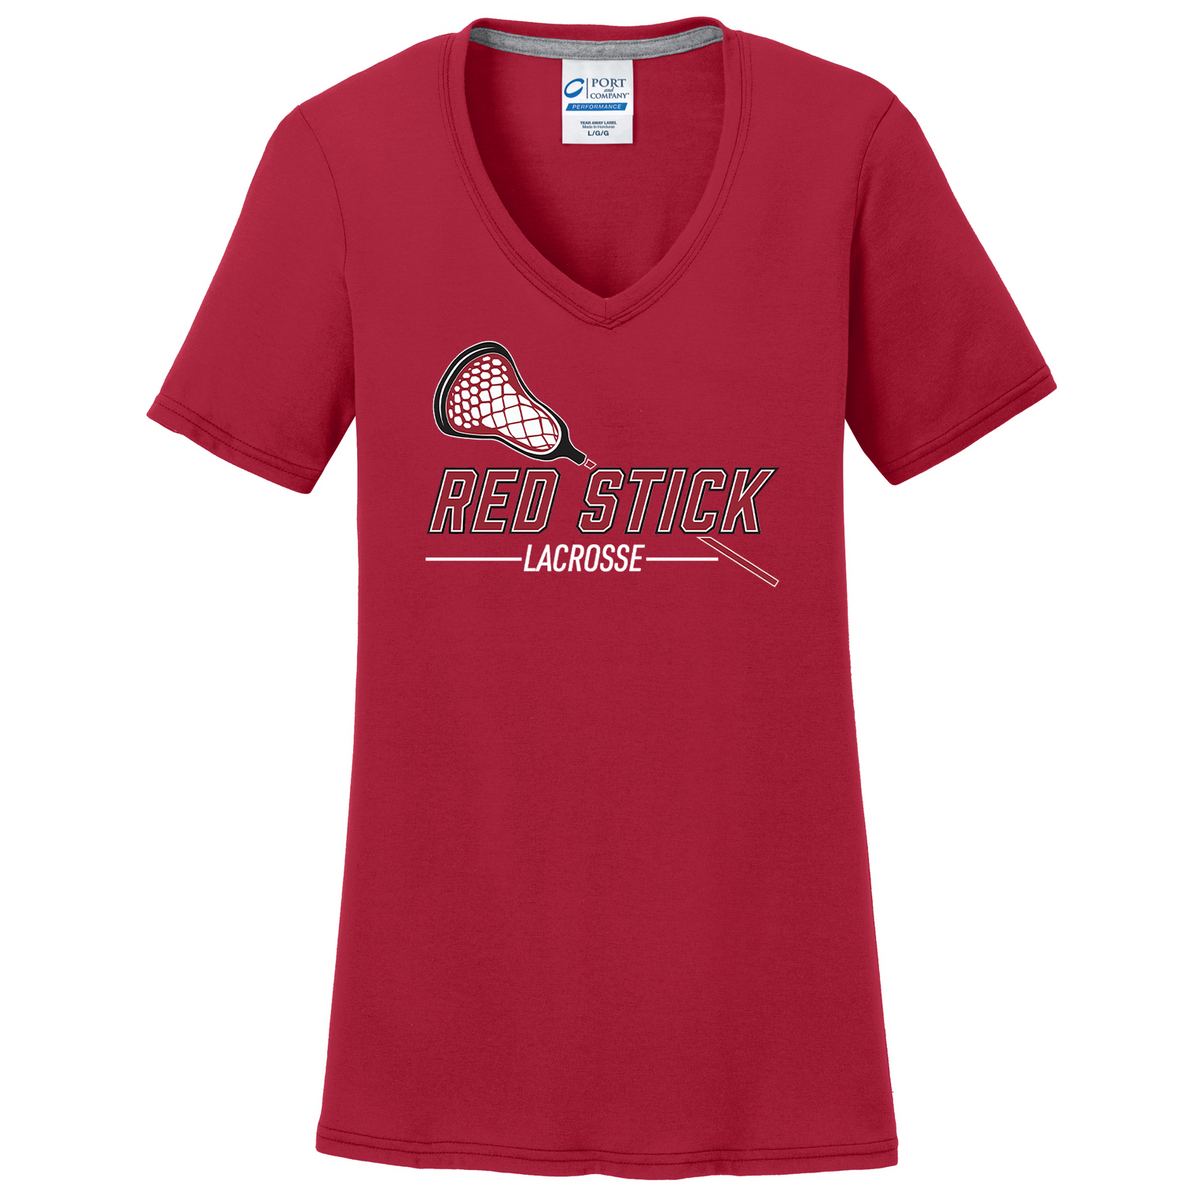 Red Stick Lacrosse Women's T-Shirt